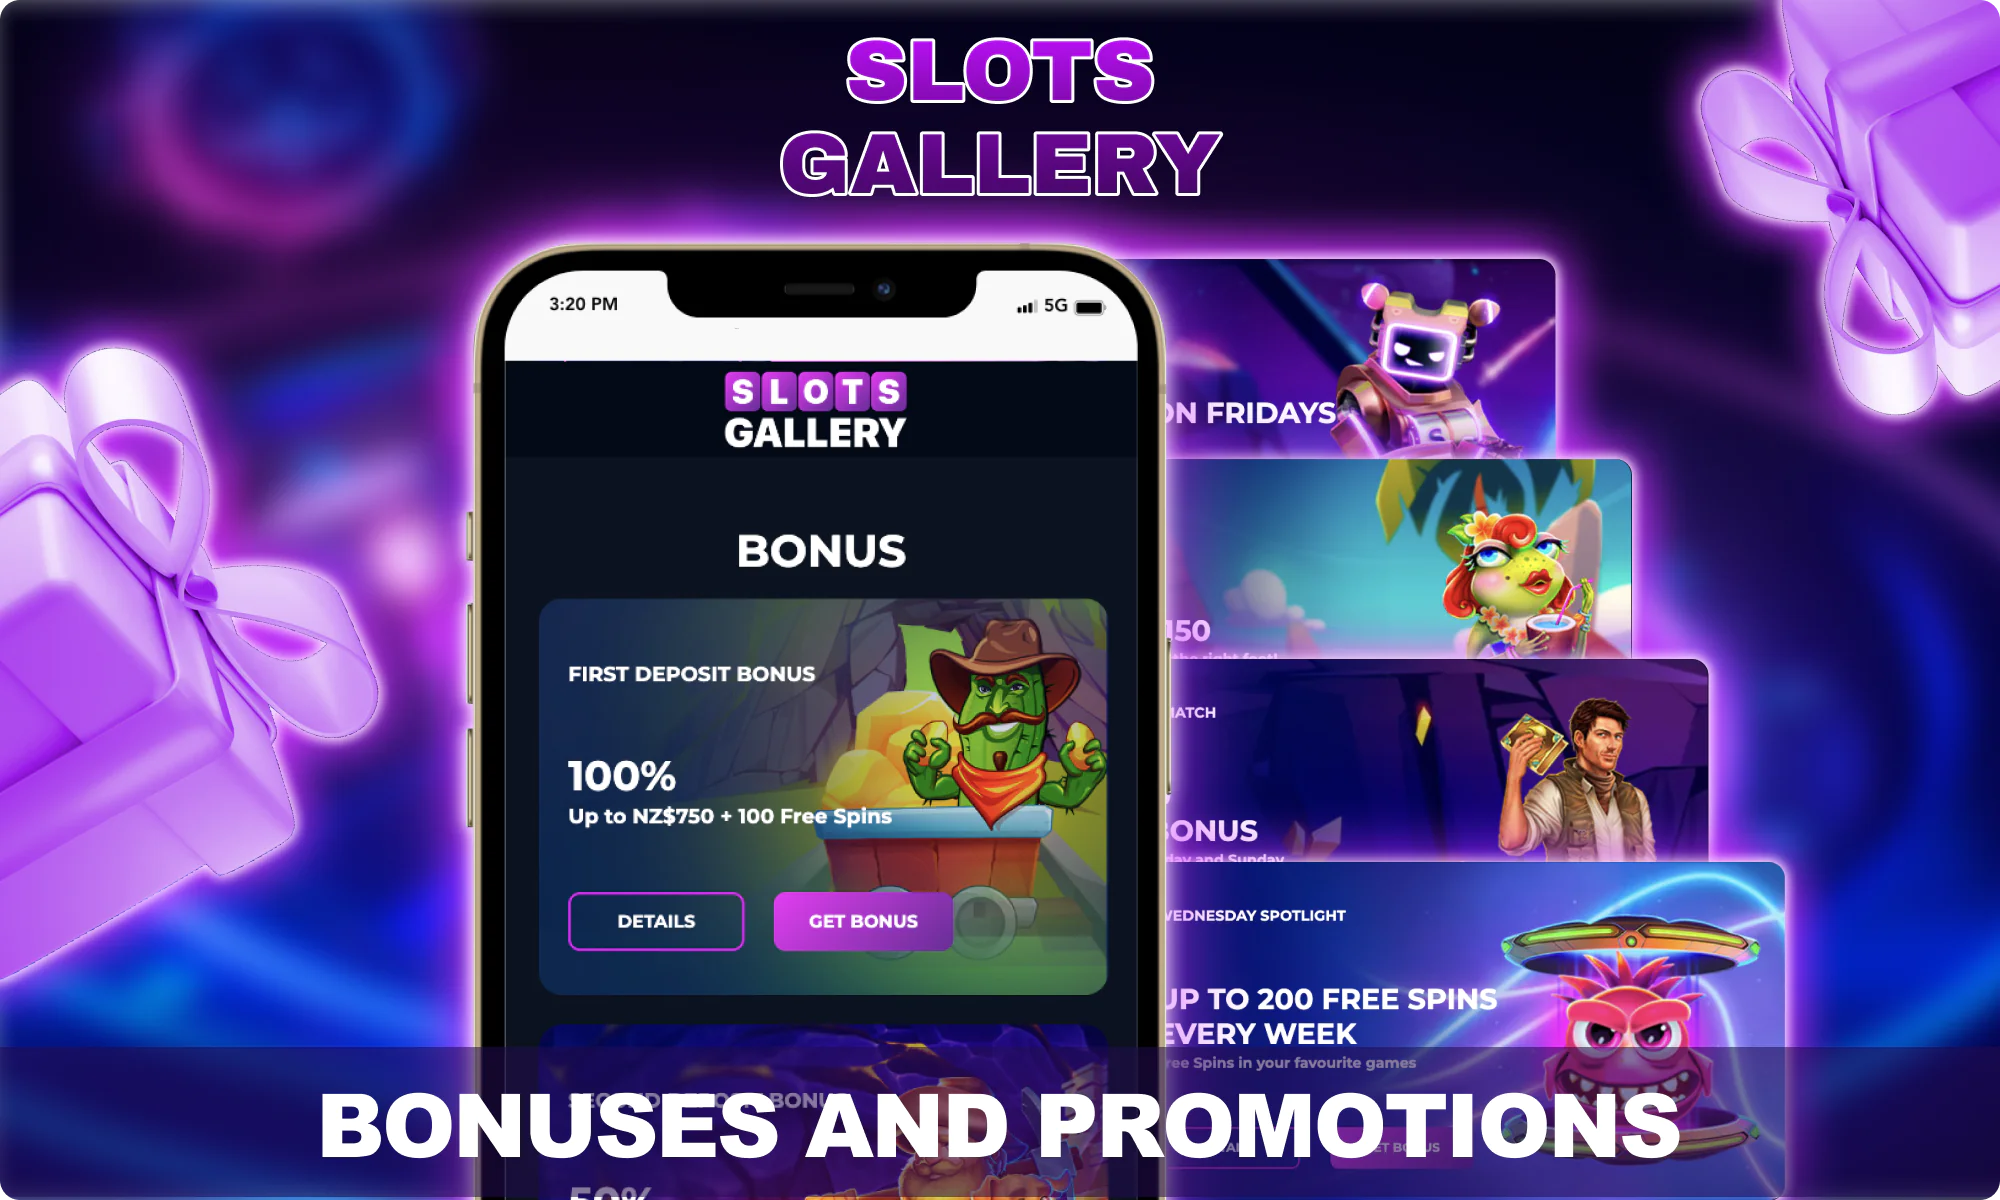 New Zealand Slots Gallery Bonus options in the App